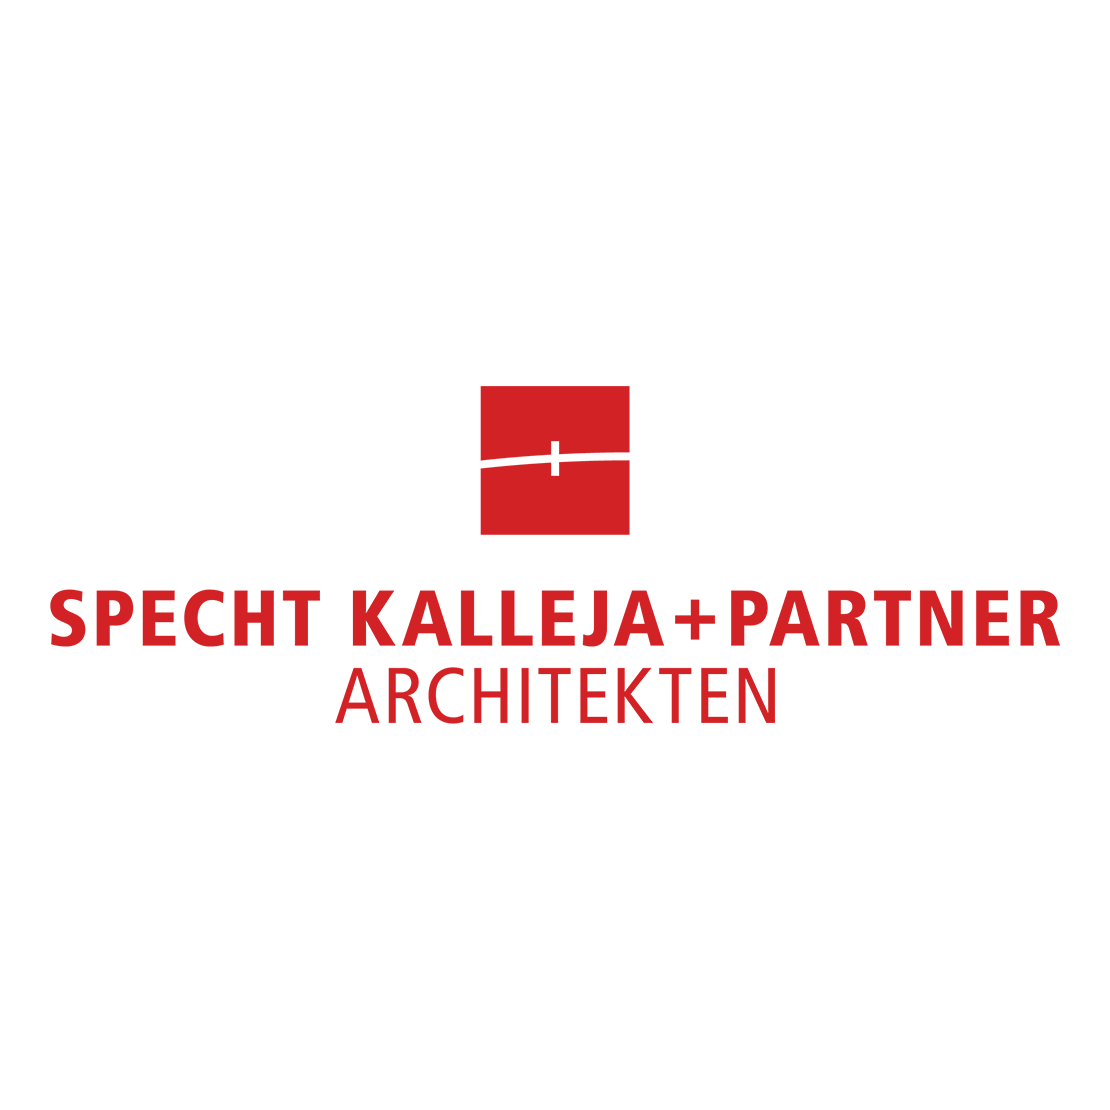 Logo SPECHT KALLEJA + PARTNER ARCHITEKTEN GmbH